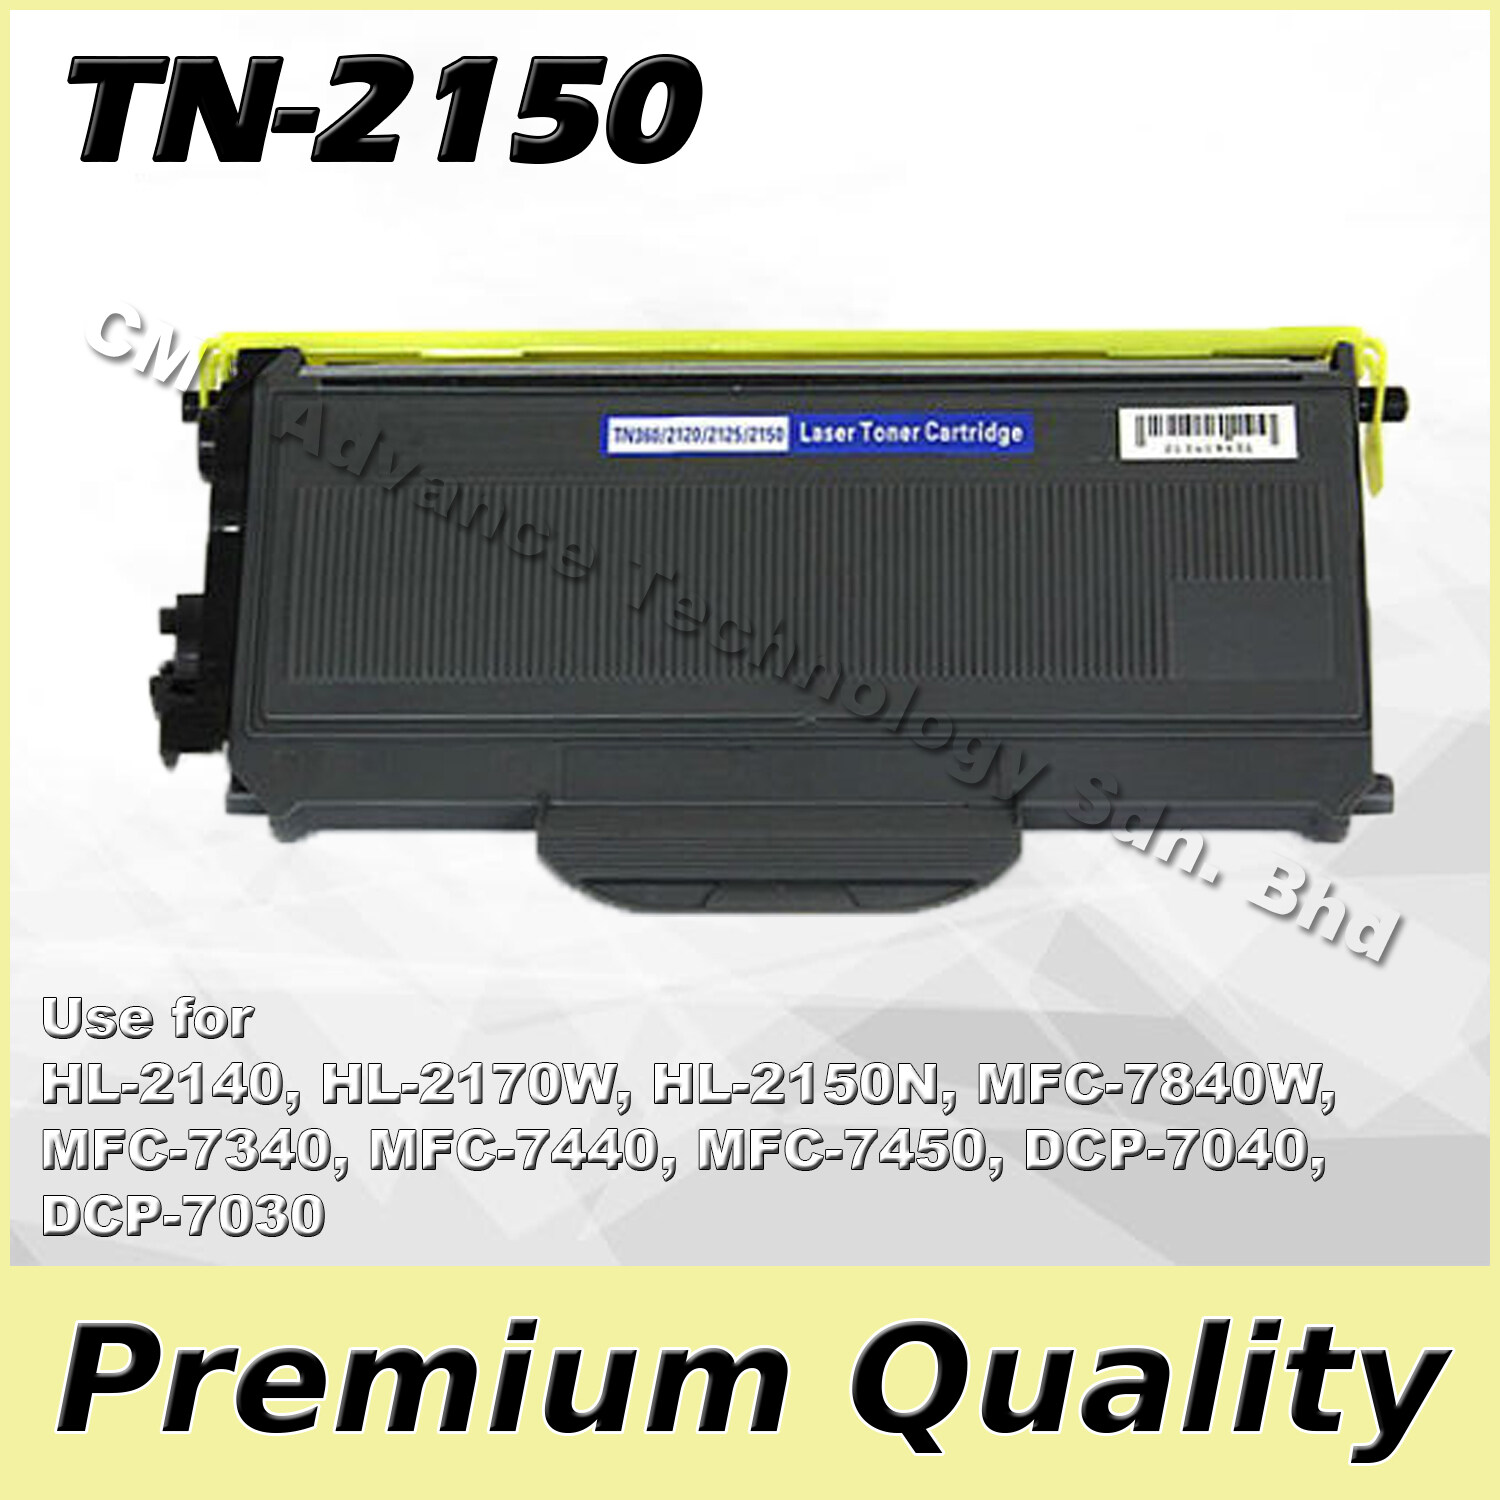 Compatible TN-2150 TN-2130 Premium Compatible Toner Cartridge For HL-2140 HL-2170W DCP-7030 DCP-7040 MFC-7340 MFC-7450 MFC-7840 TN2130 TN2150